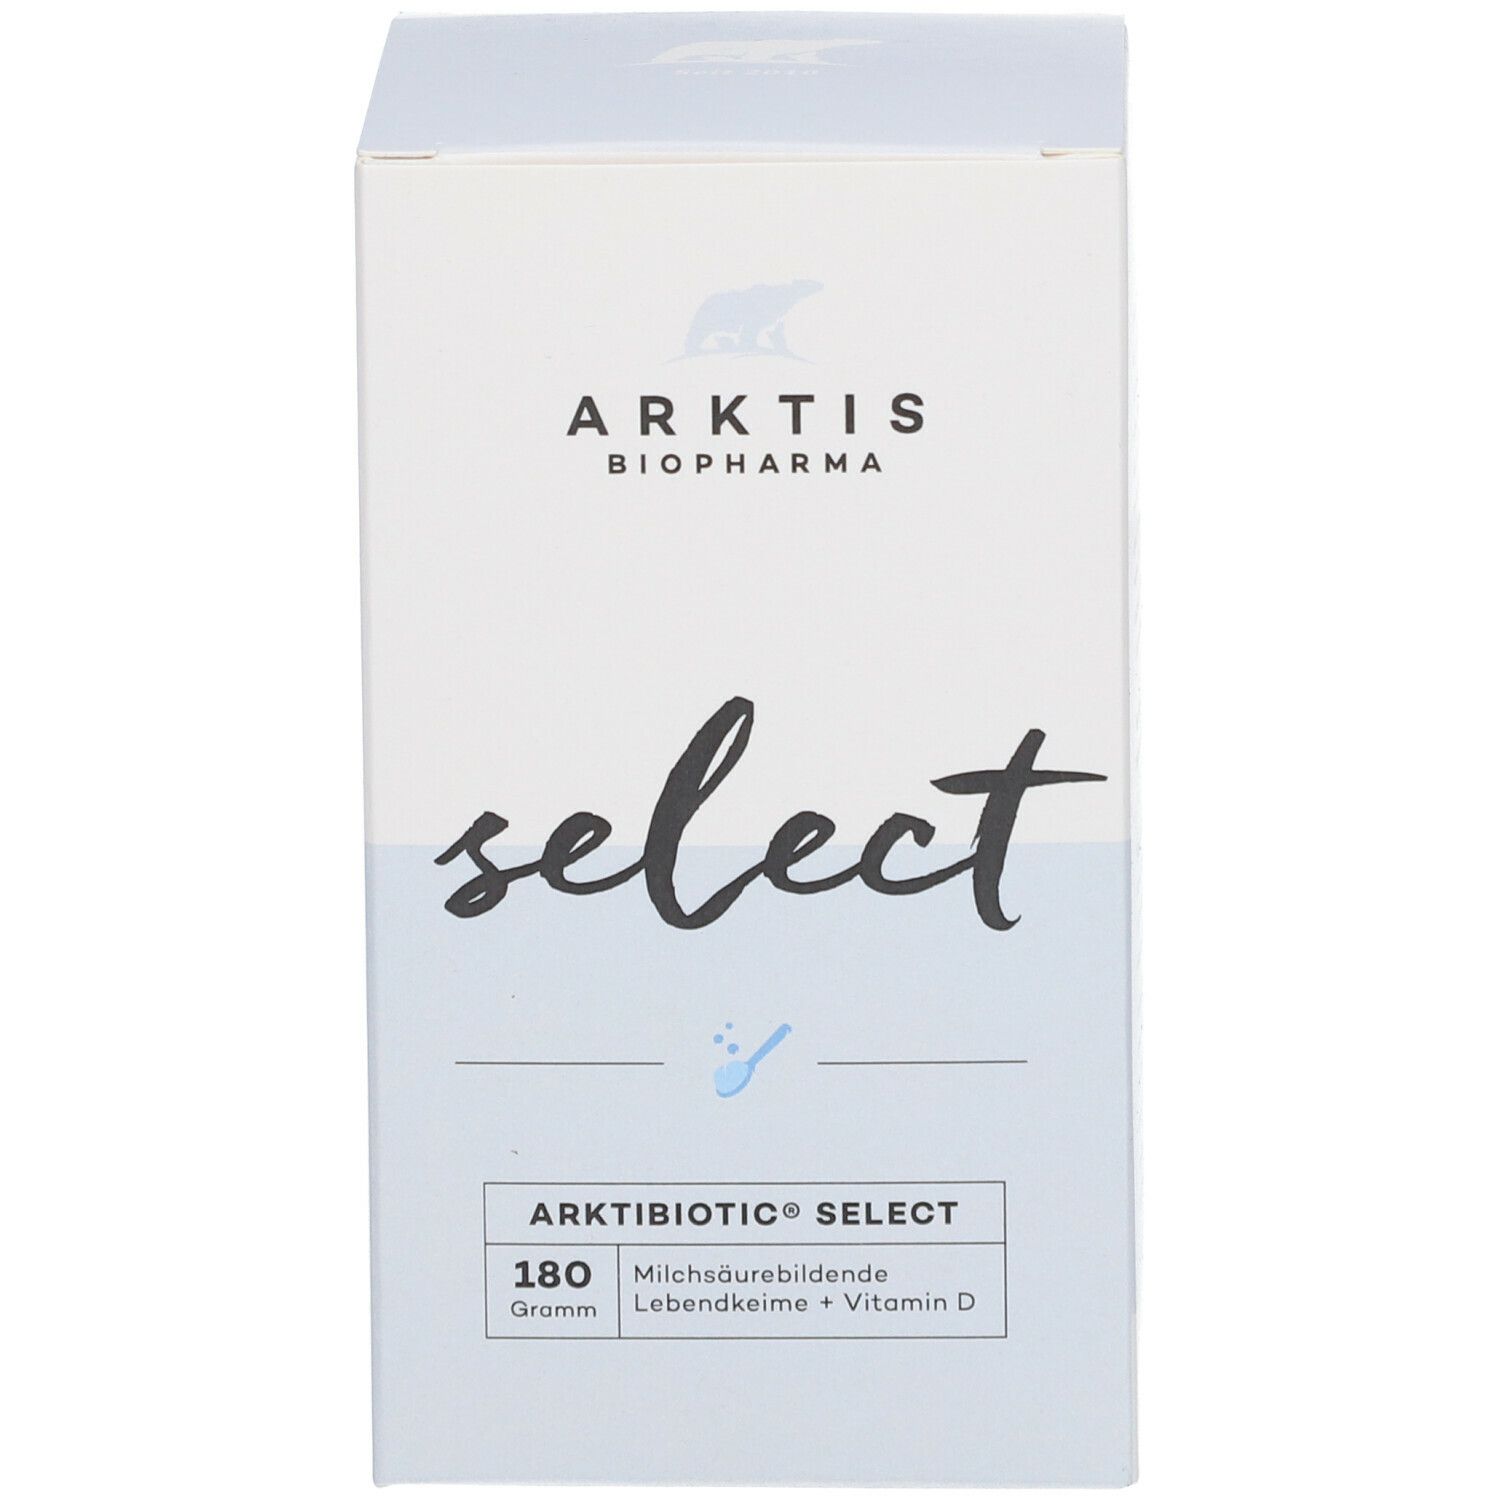 Arktis Arktibiotic Select